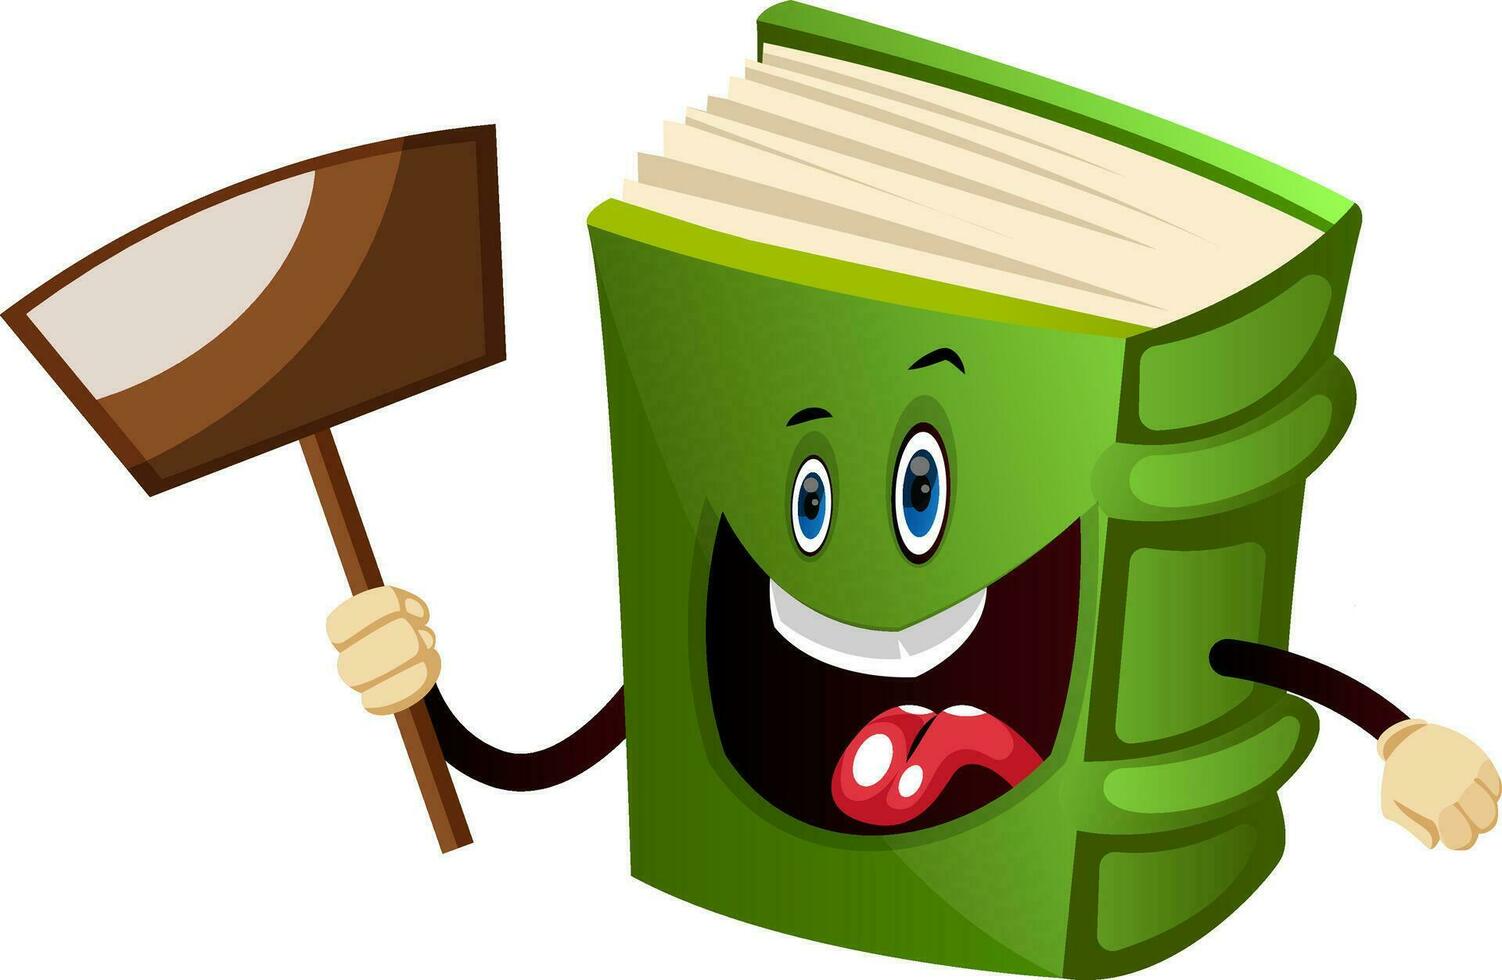 Green book holding a shovel, illustration, vector on white background.